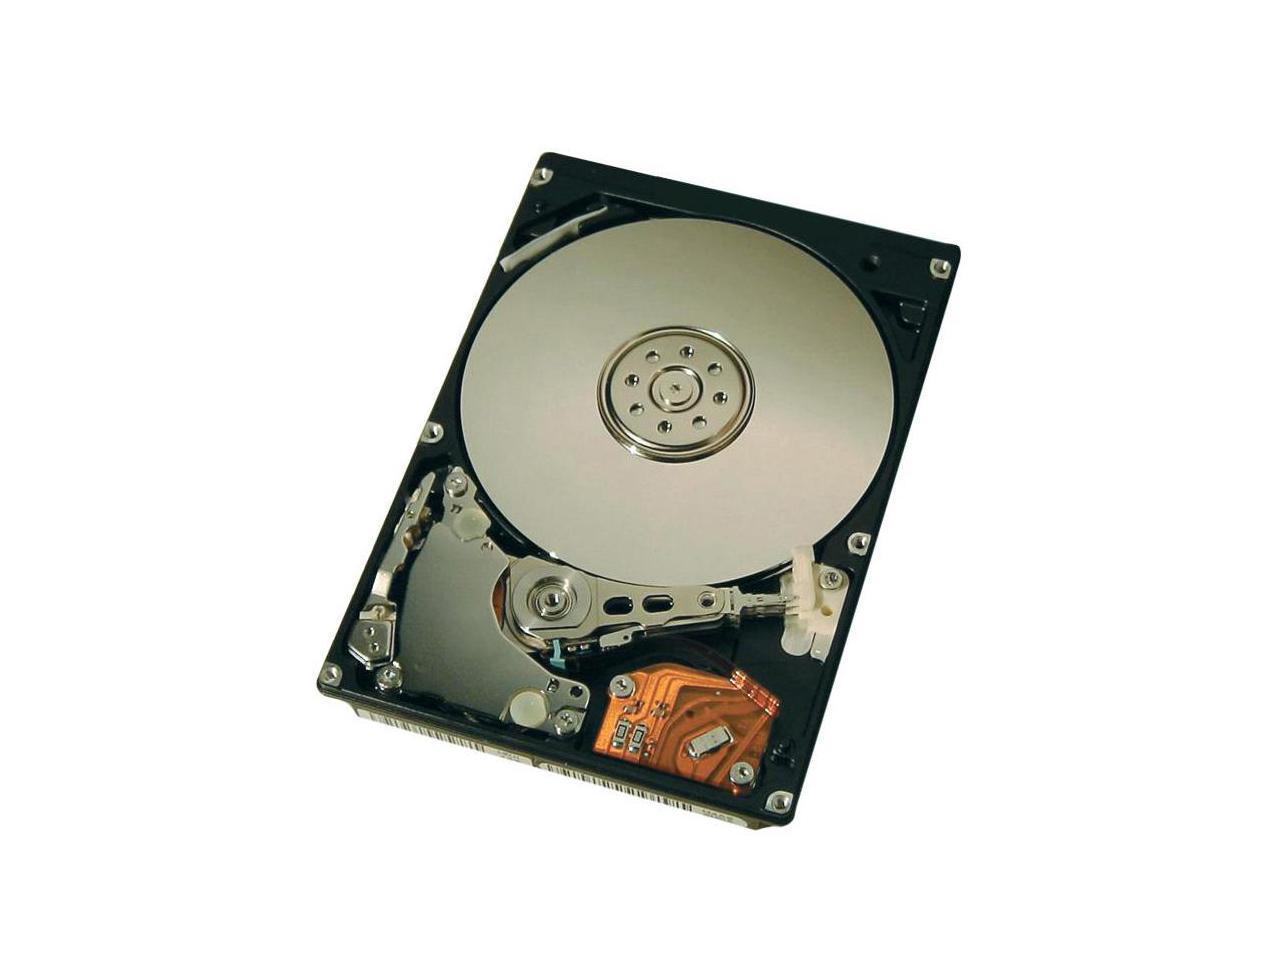 acomdata external 160gb usb 2.0 hard drive for pc/mac (model hd160u2e3-72)